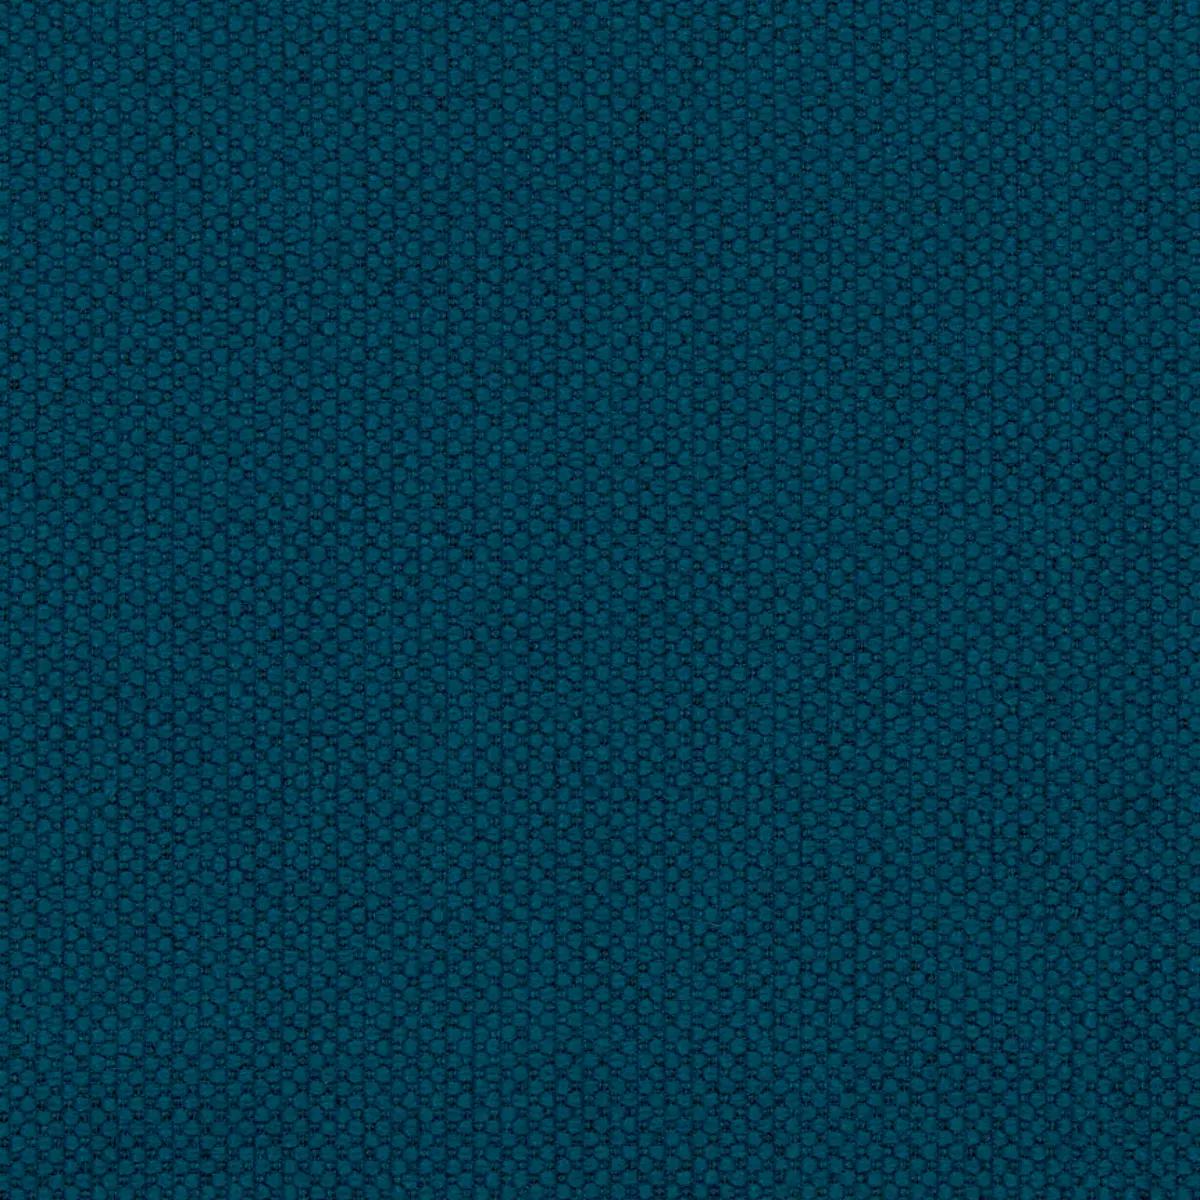 Fabric sample Merit 0015 blue